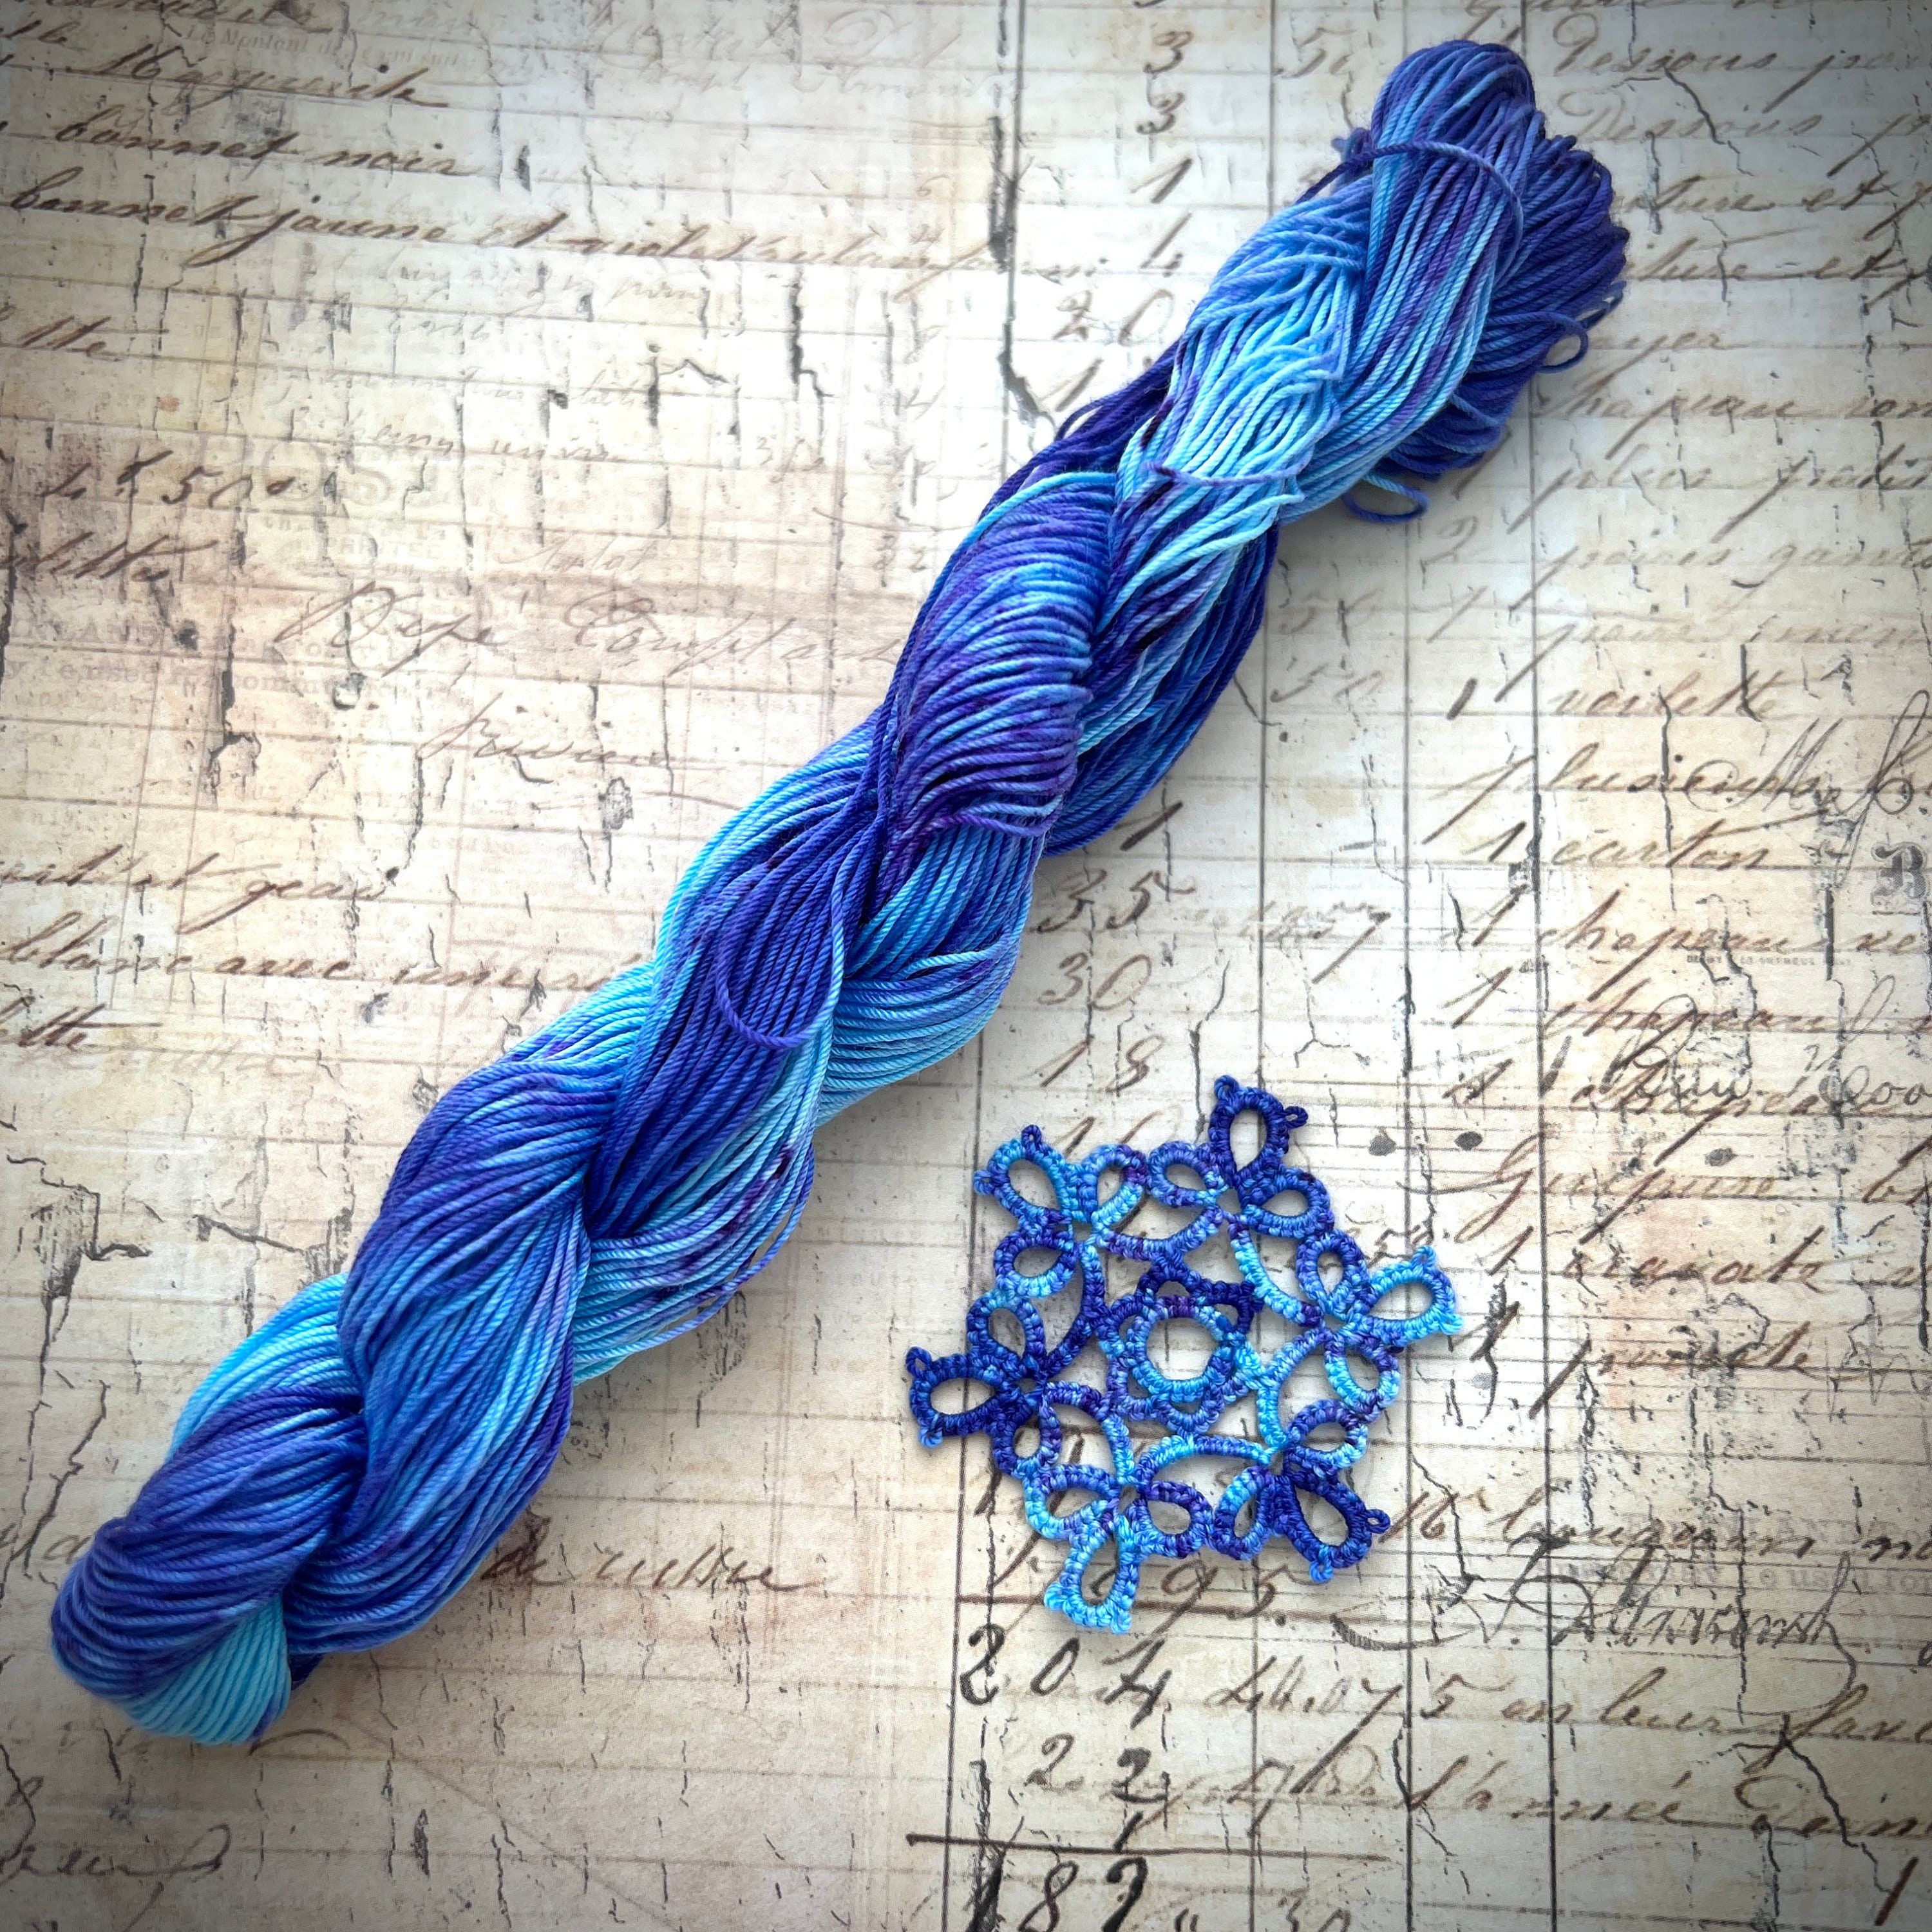 Tatting Thread Ariadna Muza 20 Indigo Blue, Light Blue, Cotton Thread for  Shuttle Tatting and Crochet 